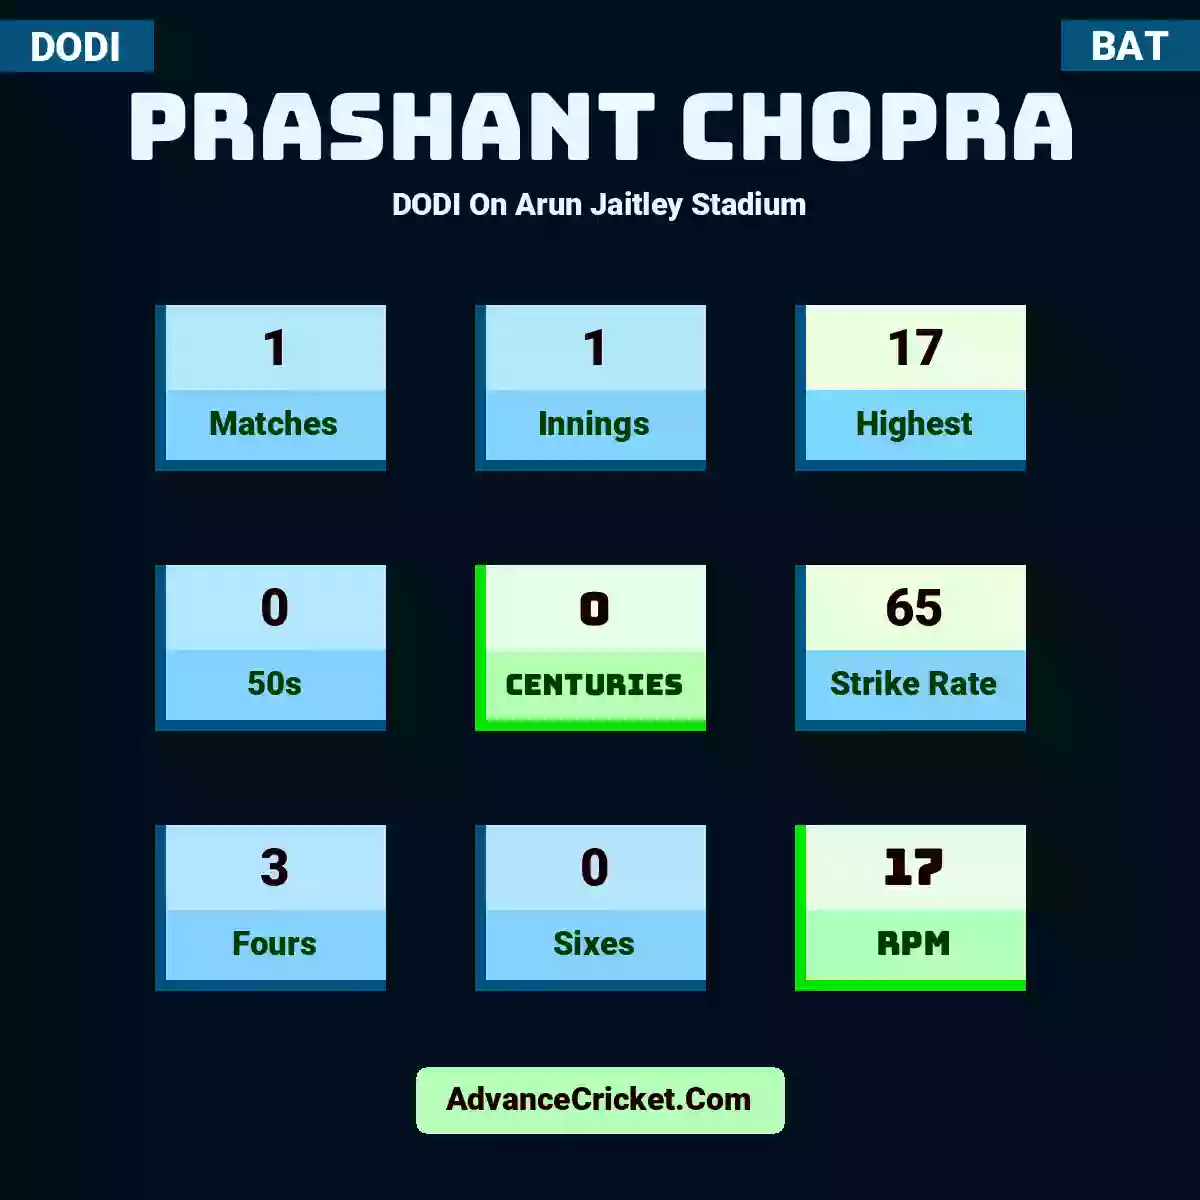 Prashant Chopra DODI  On Arun Jaitley Stadium, Prashant Chopra played 1 matches, scored 17 runs as highest, 0 half-centuries, and 0 centuries, with a strike rate of 65. P.Chopra hit 3 fours and 0 sixes, with an RPM of 17.